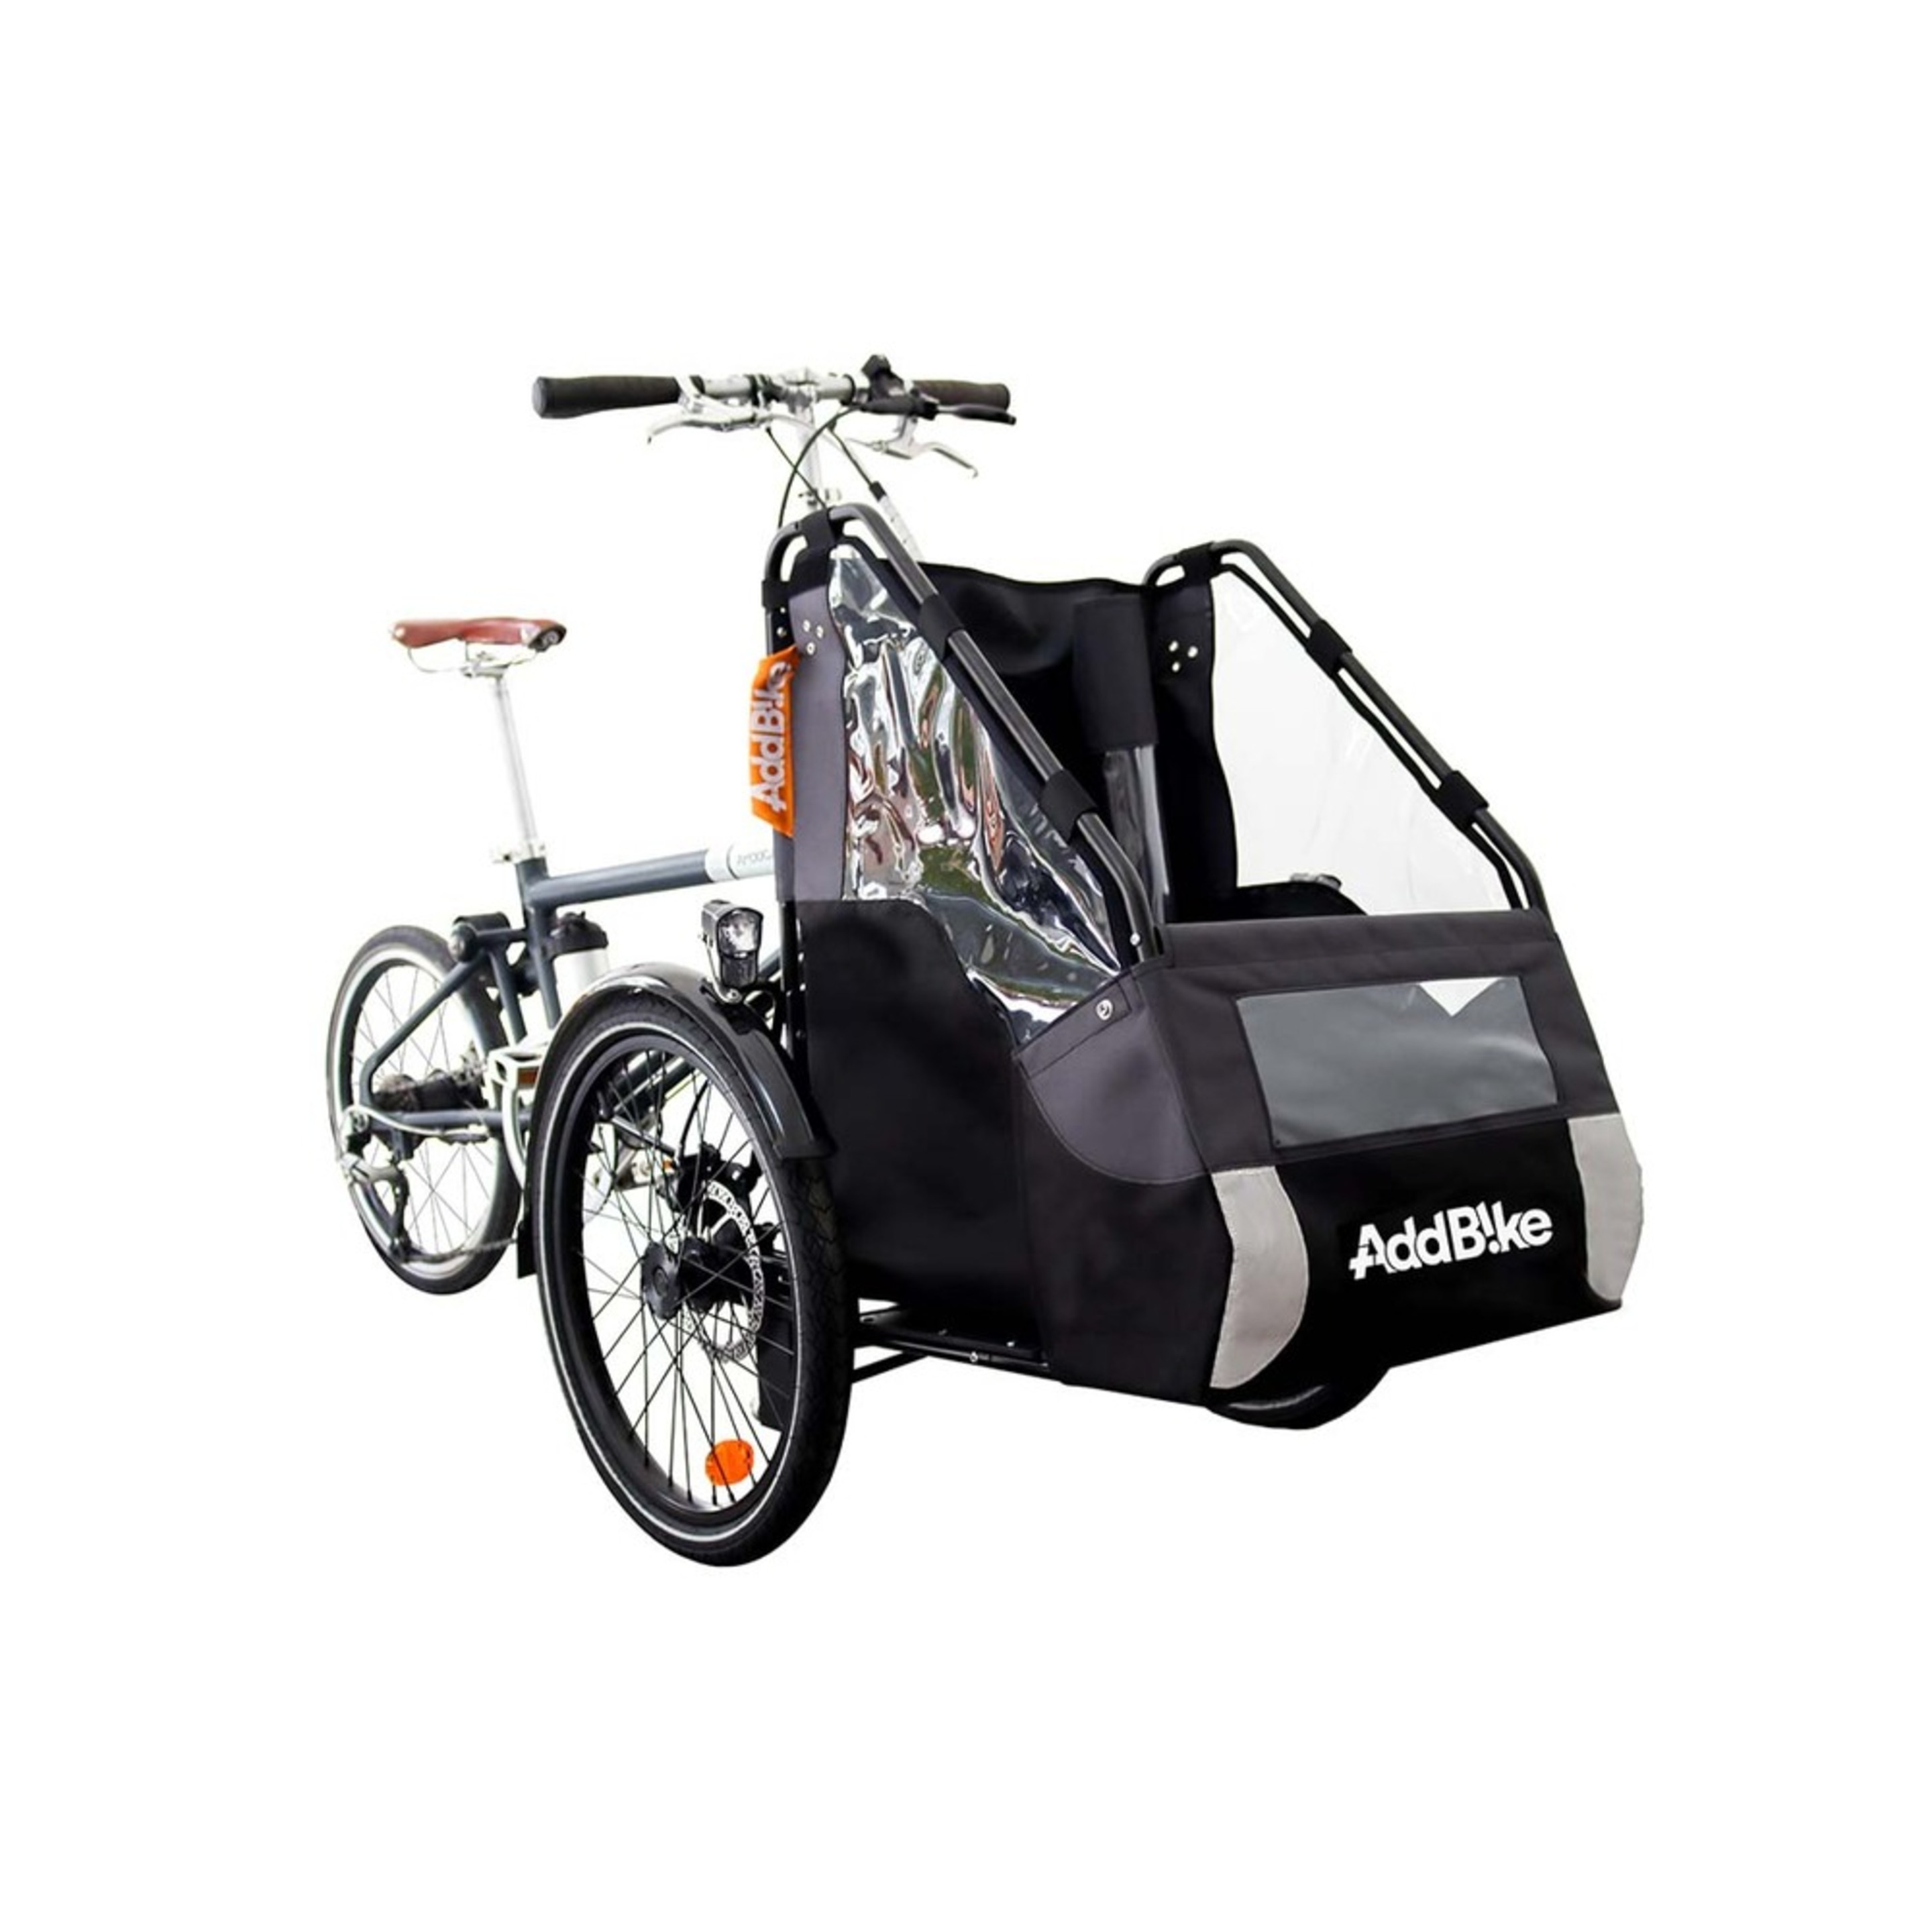 Kit Delantero Addbike Transporte Perro - gris-negro - 